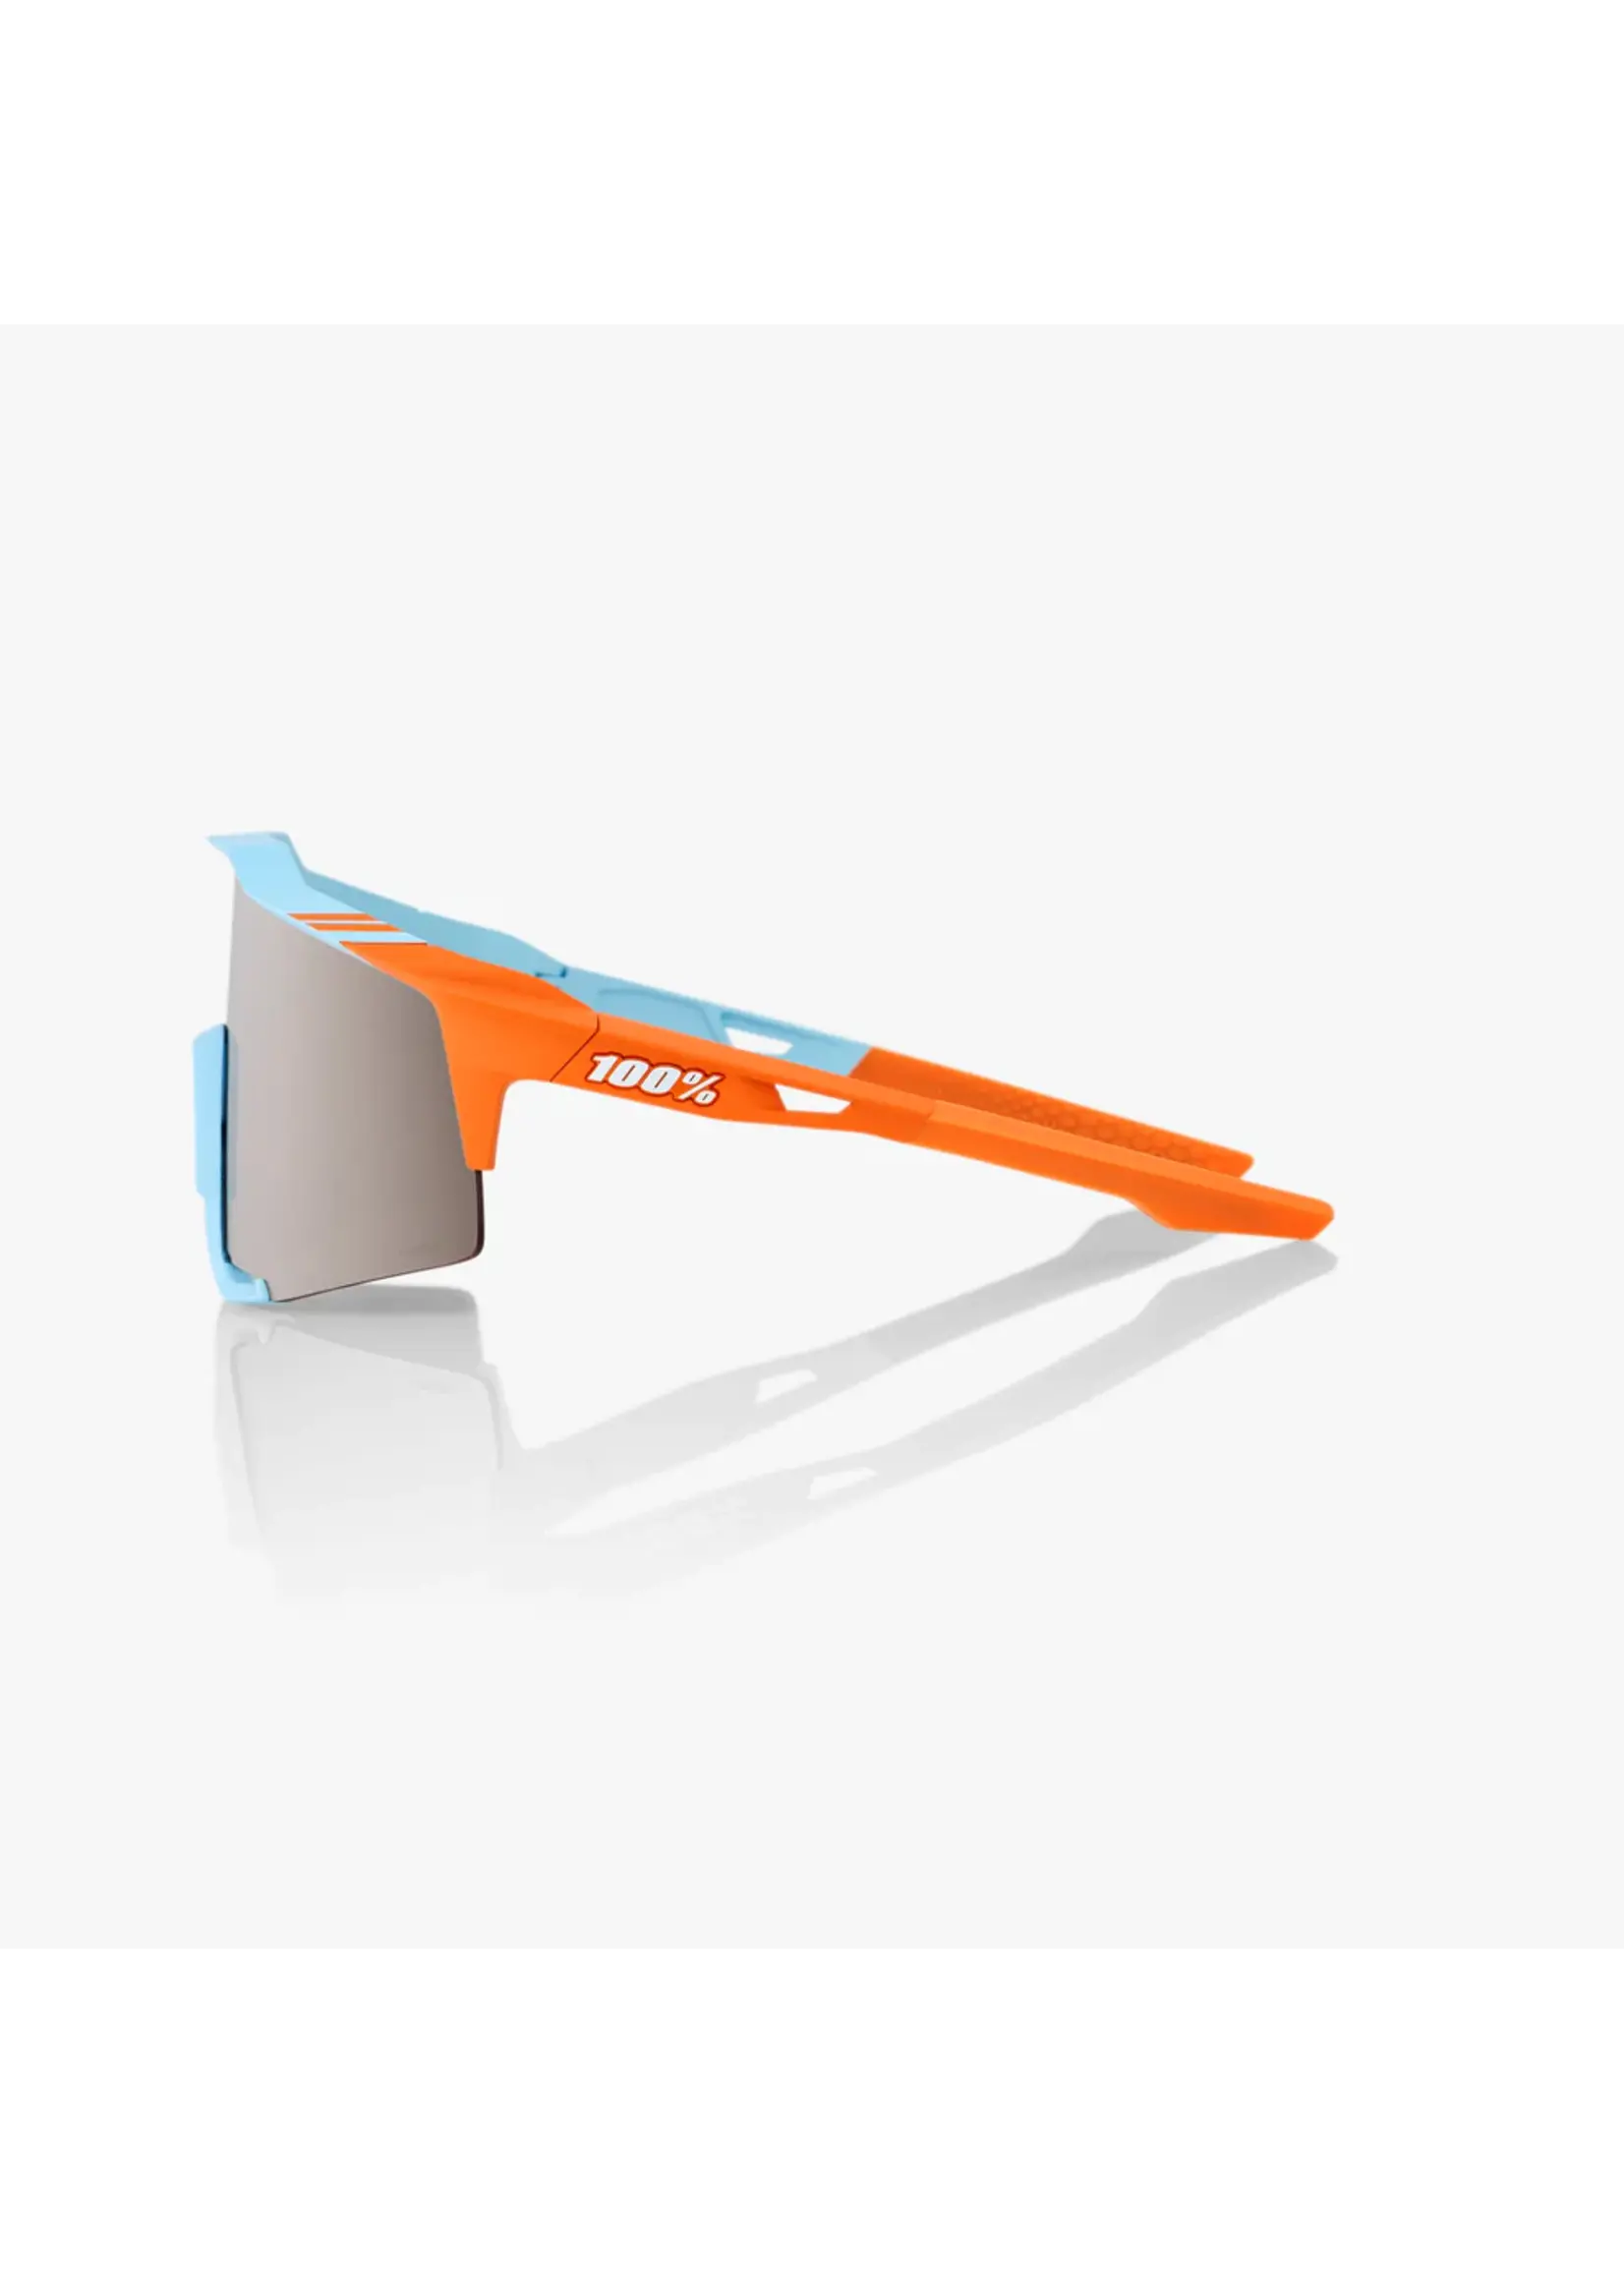 100 Percent 100% Speedcraft Sunglasses - Soft Tact Two Tone - HiPER Silver Mirror Lens